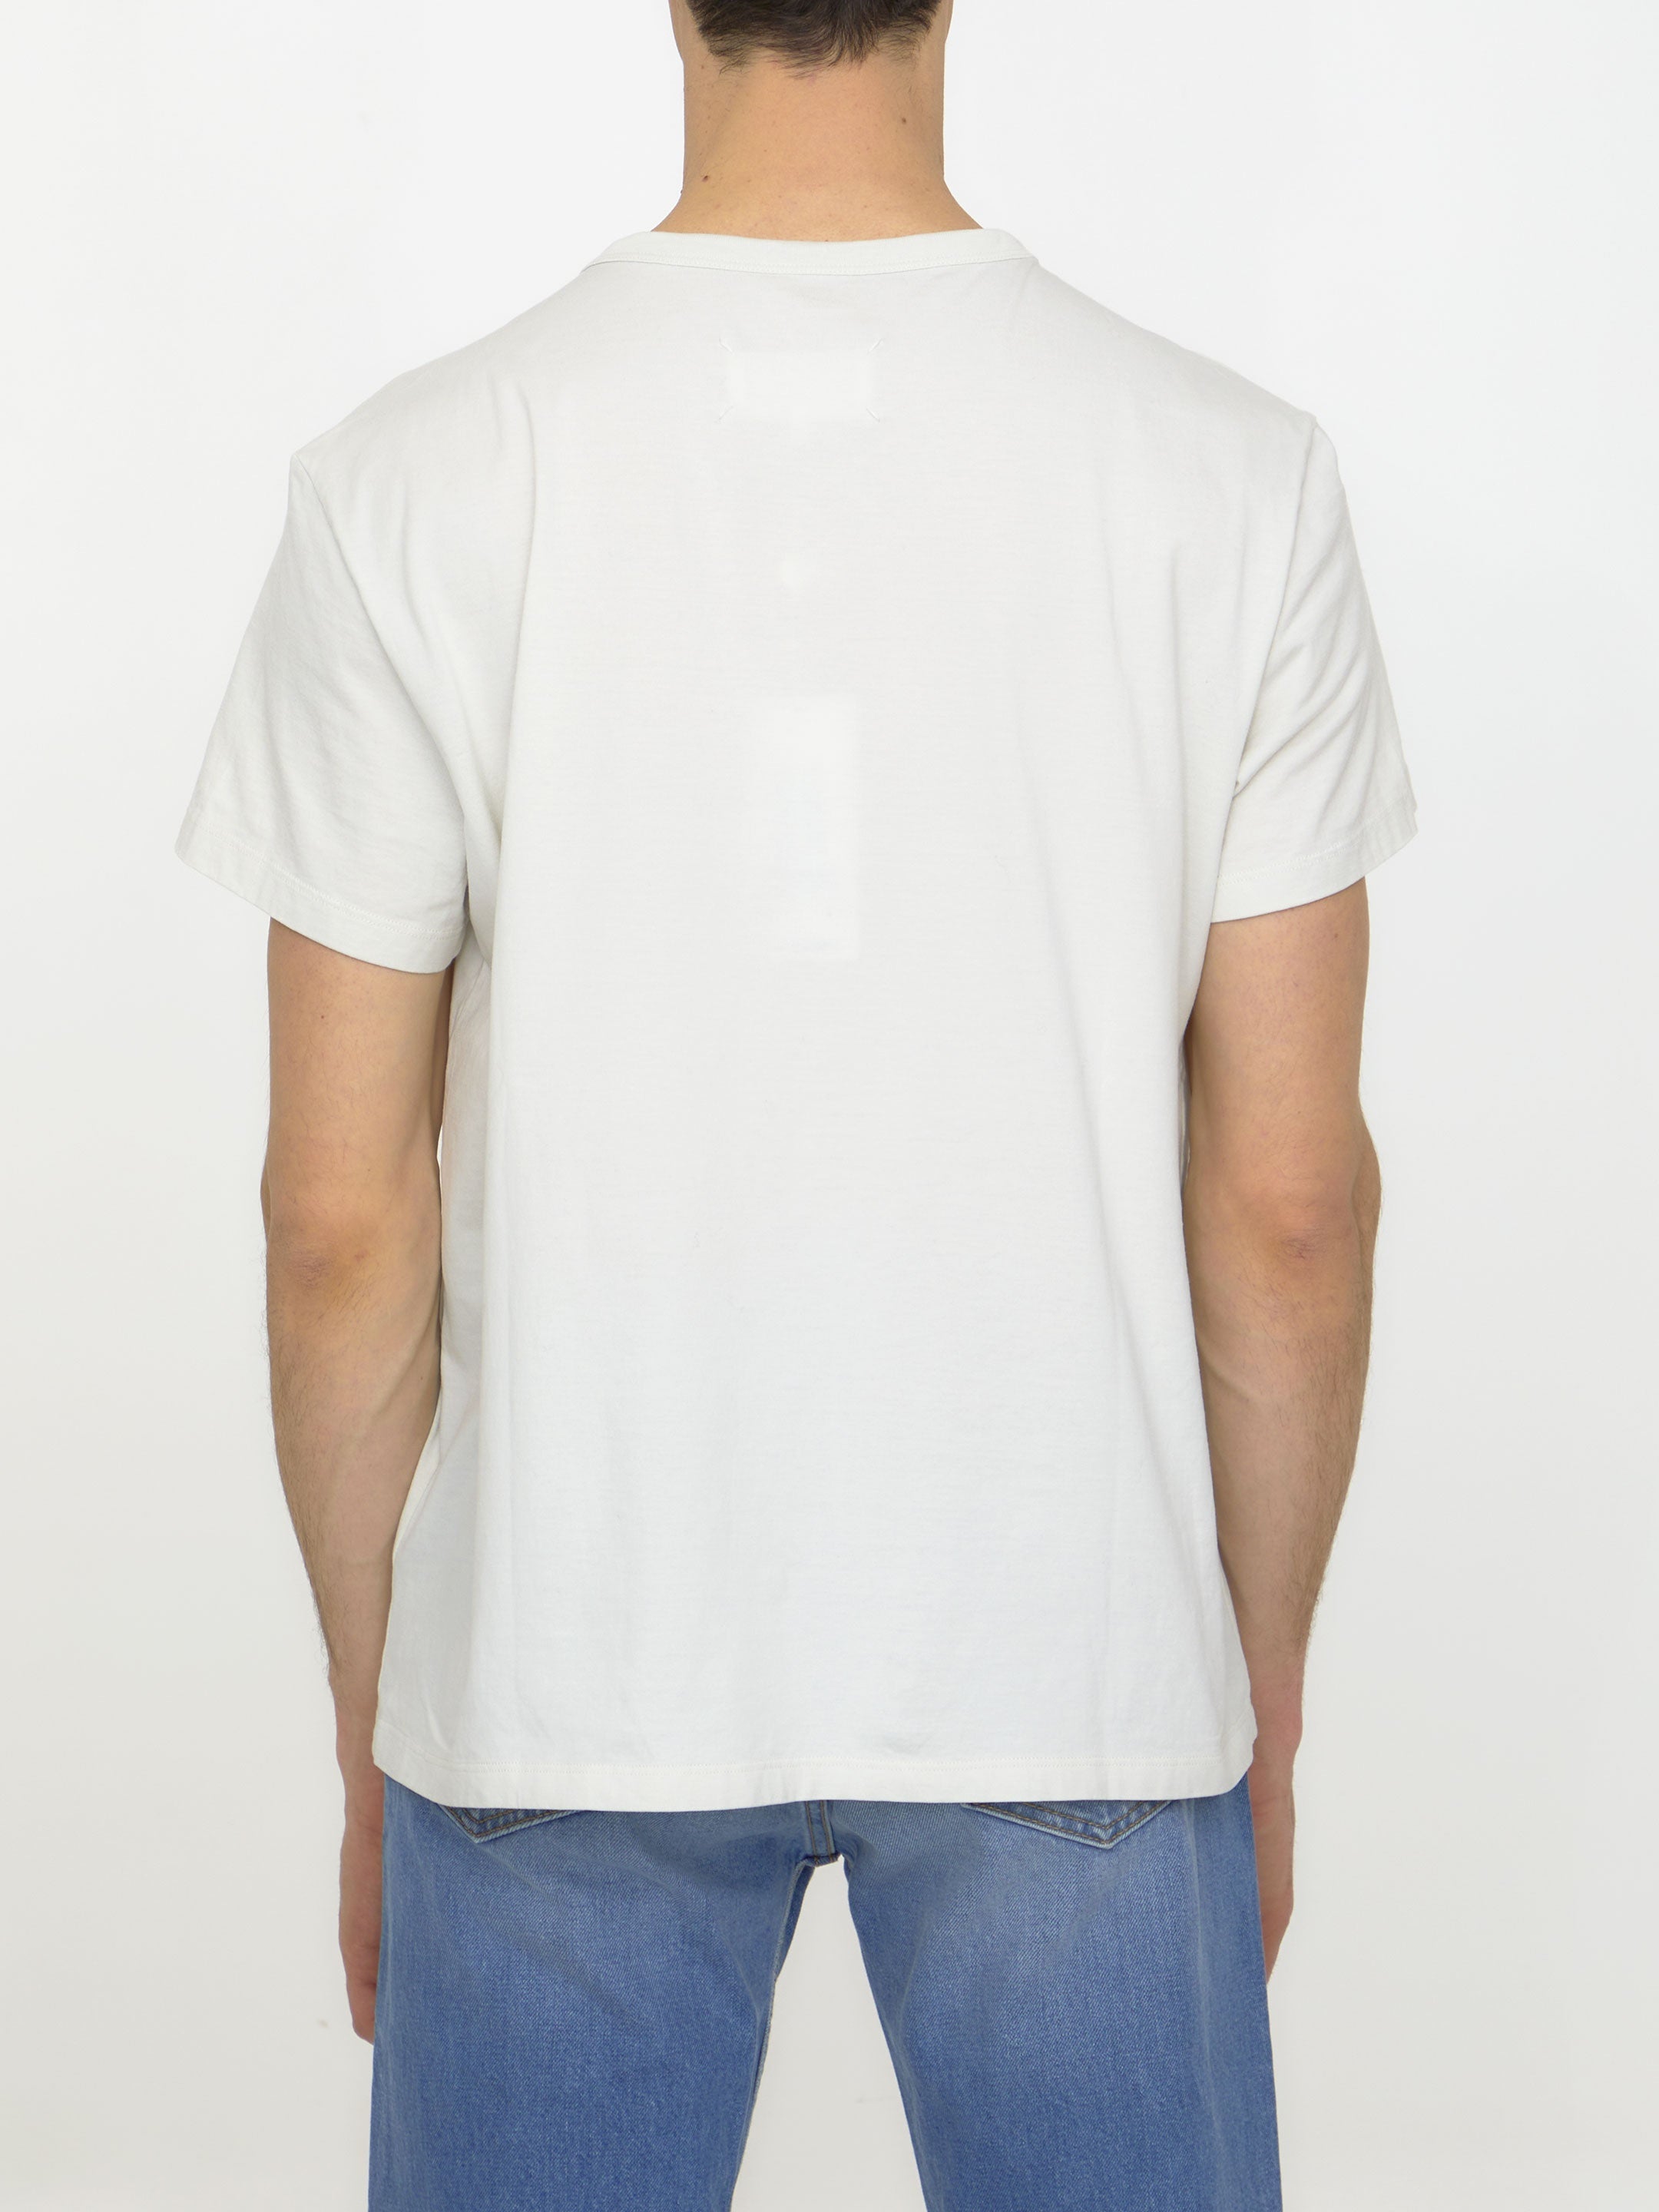 MAISON-MARGIELA-OUTLET-SALE-Numerical-logo-t-shirt-Shirts-ARCHIVE-COLLECTION-4.jpg